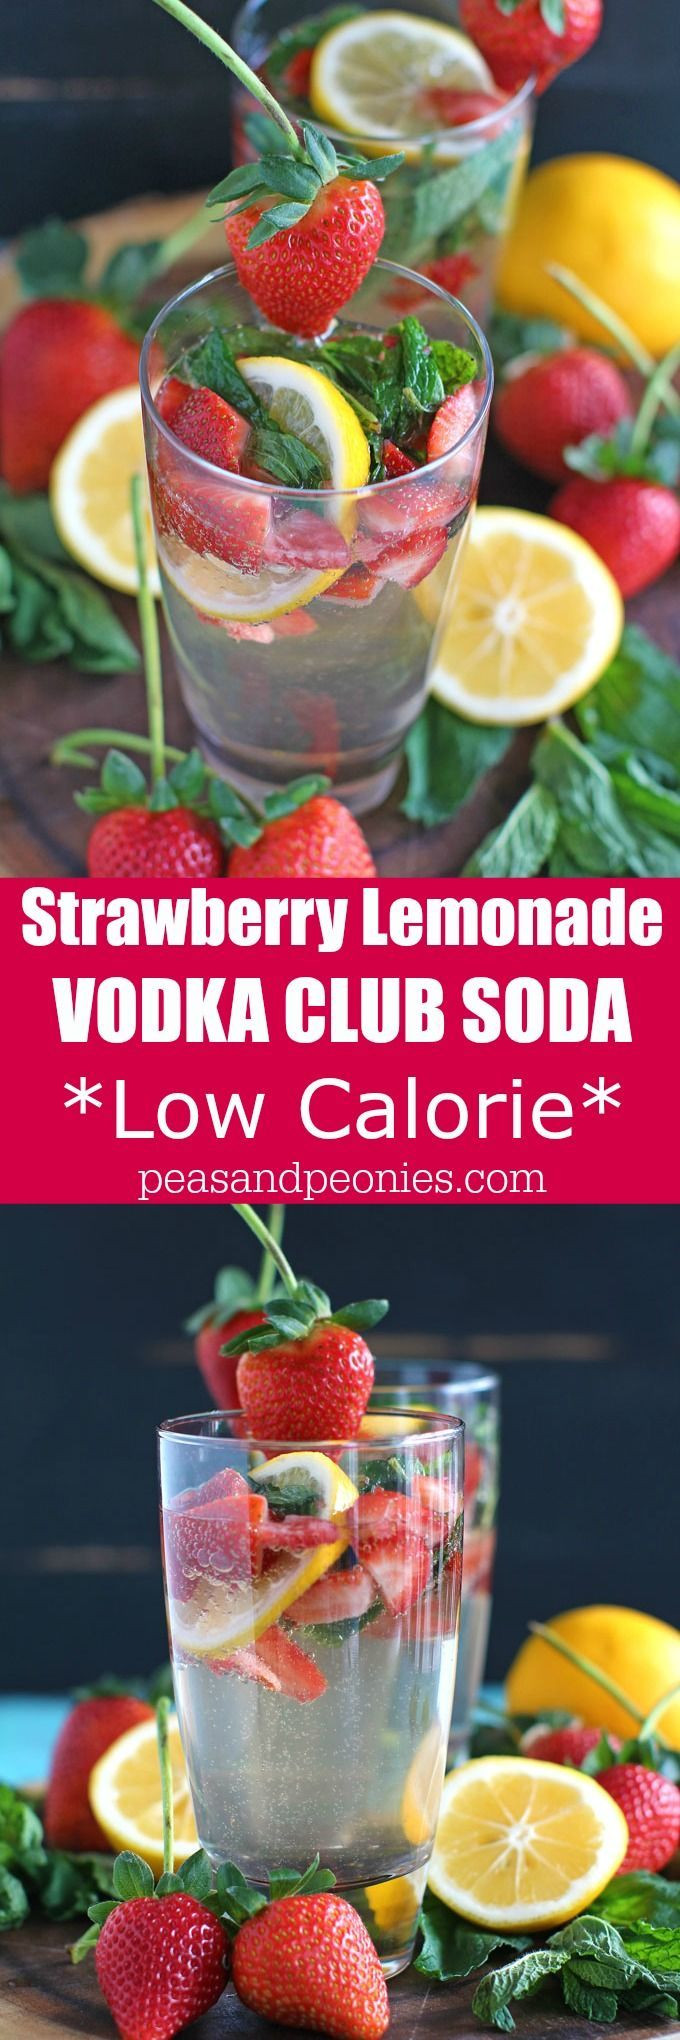 Low Calorie Vodka Drink Recipes
 Lemonade Vodka Club Soda Recipe With images